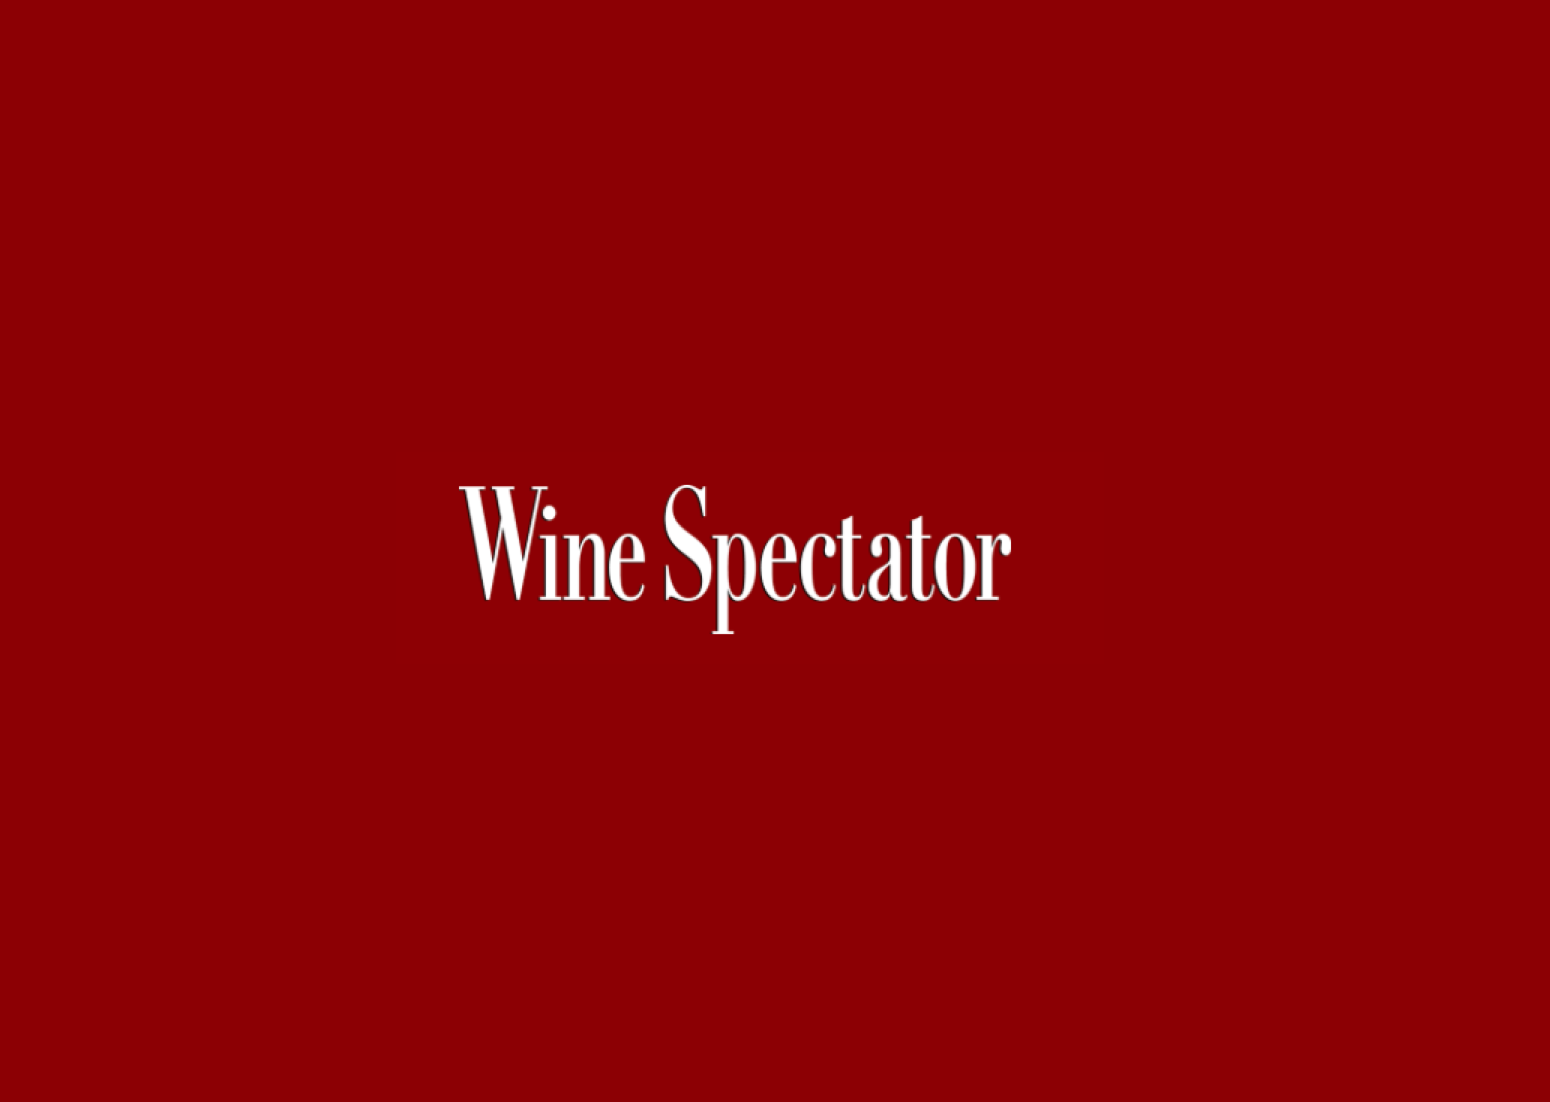 wine spectator